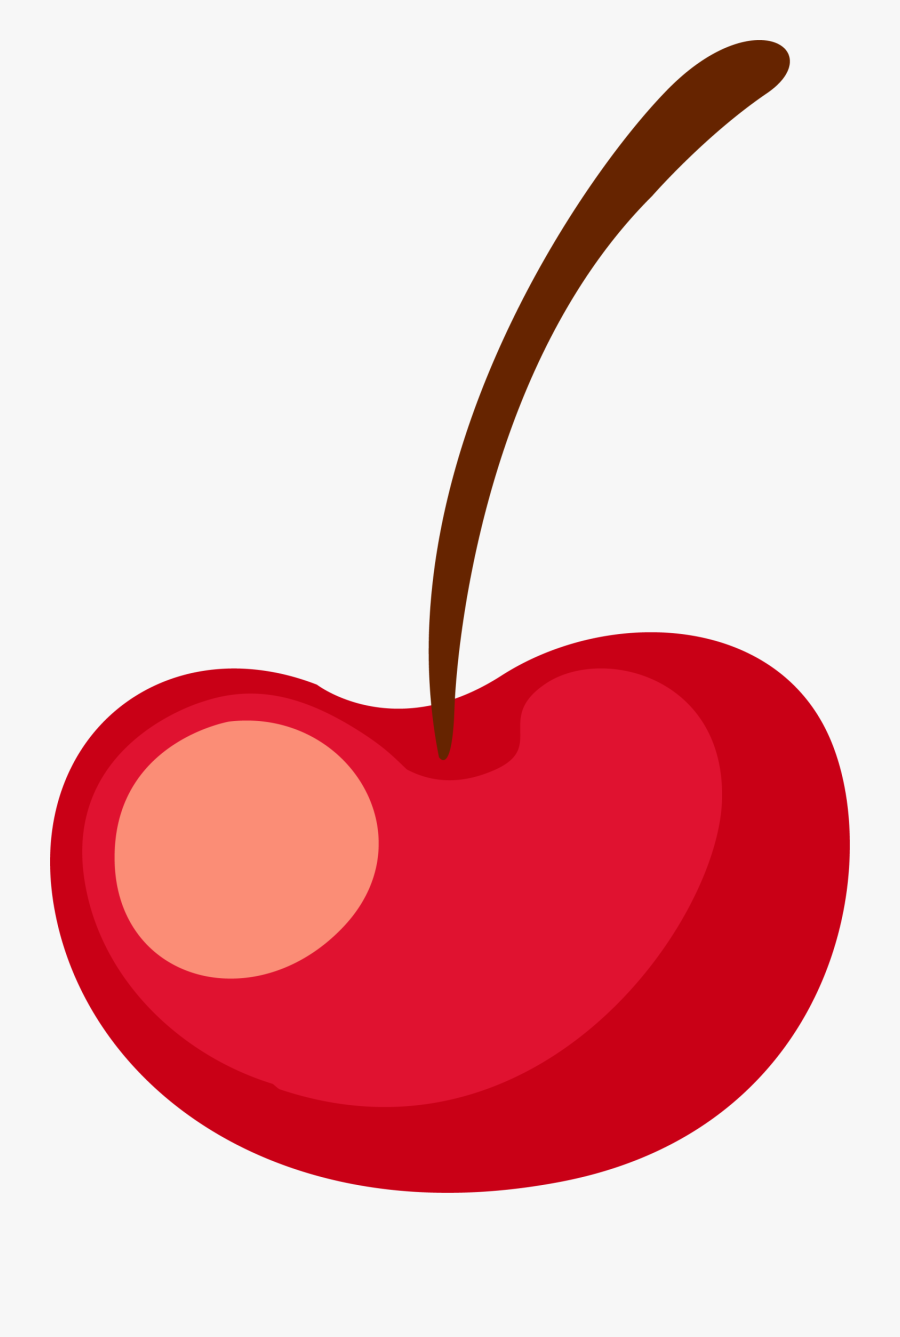 Mango Clipart Cherry - Cartoon Cherry Transparent Background, Transparent Clipart